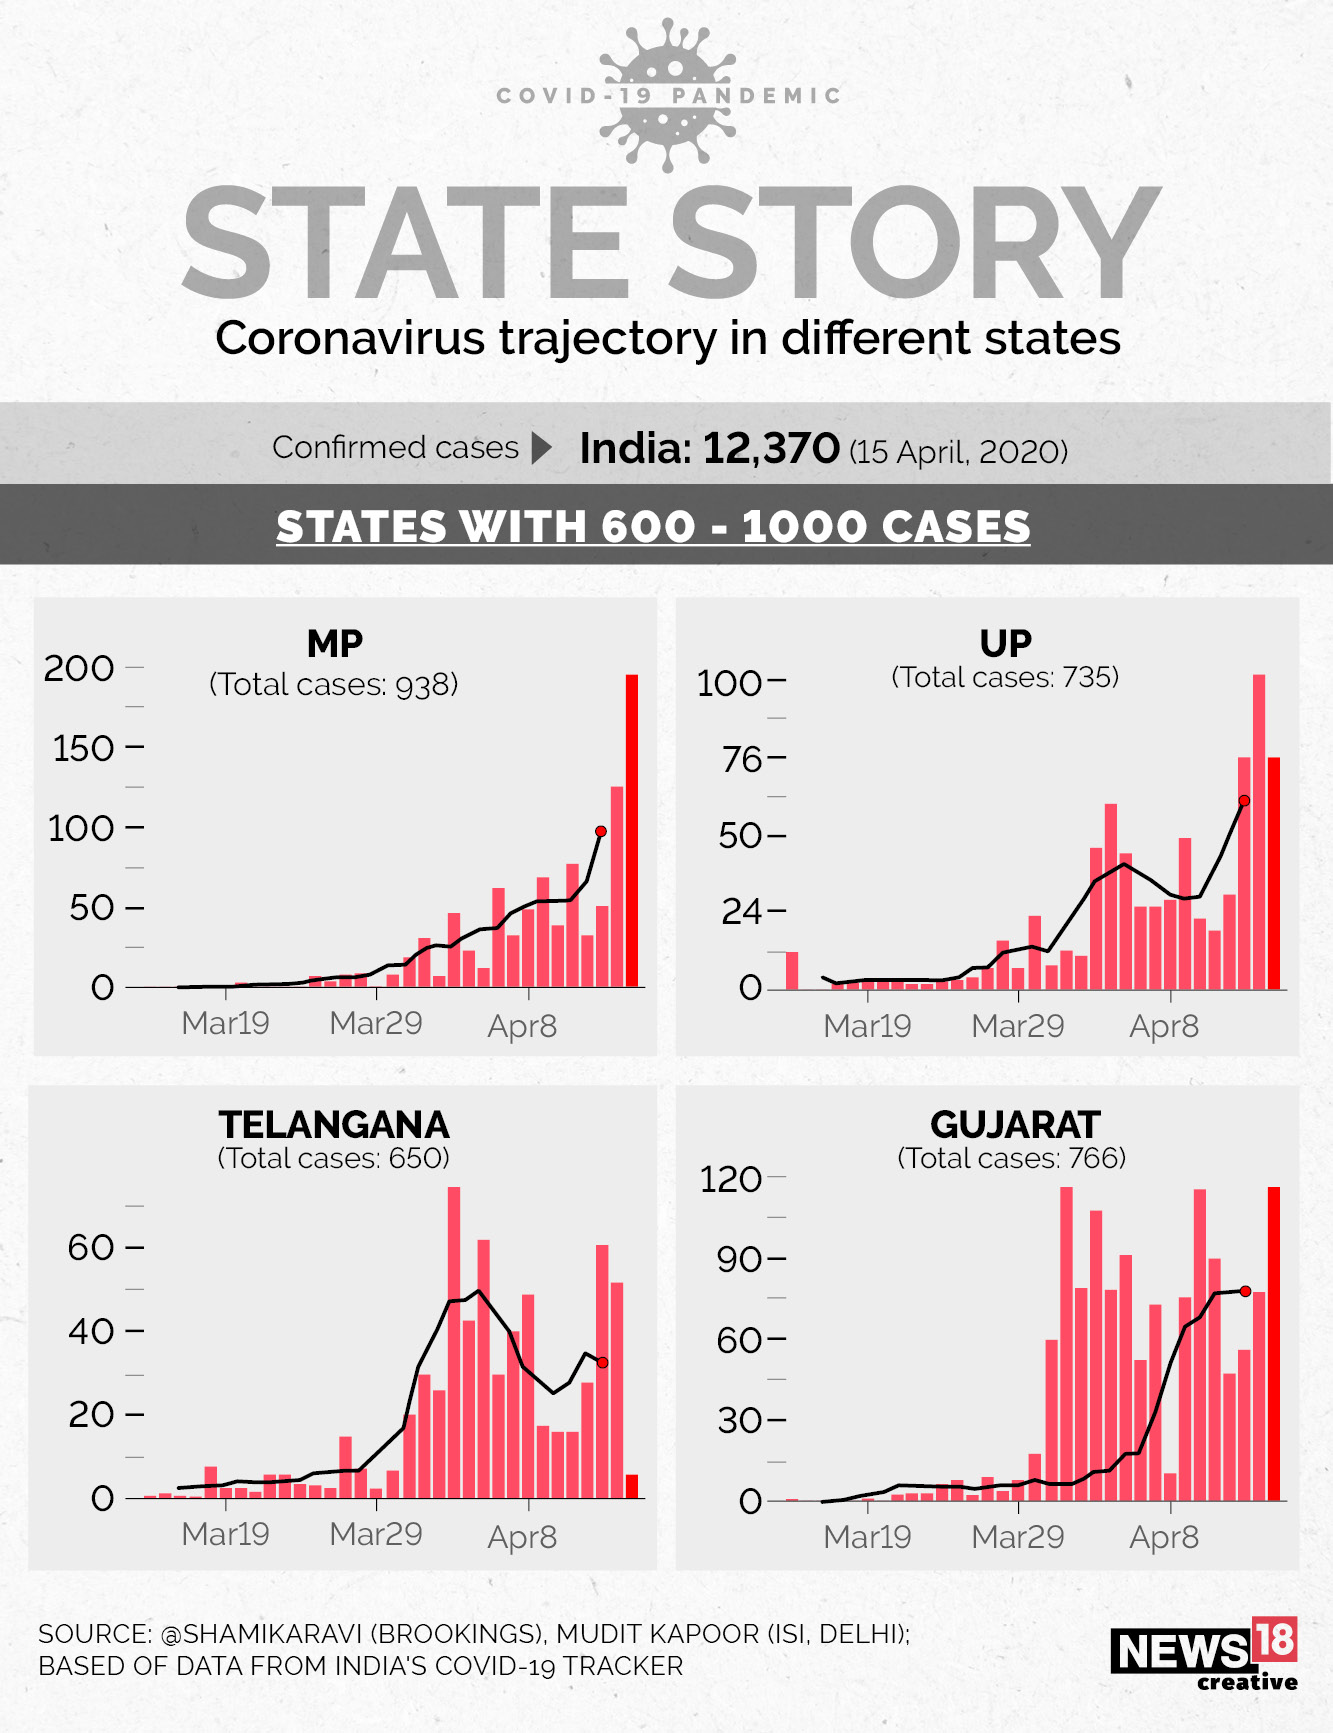 Covid-19 case curve across states, from Maharashtra to Tamil Nadu